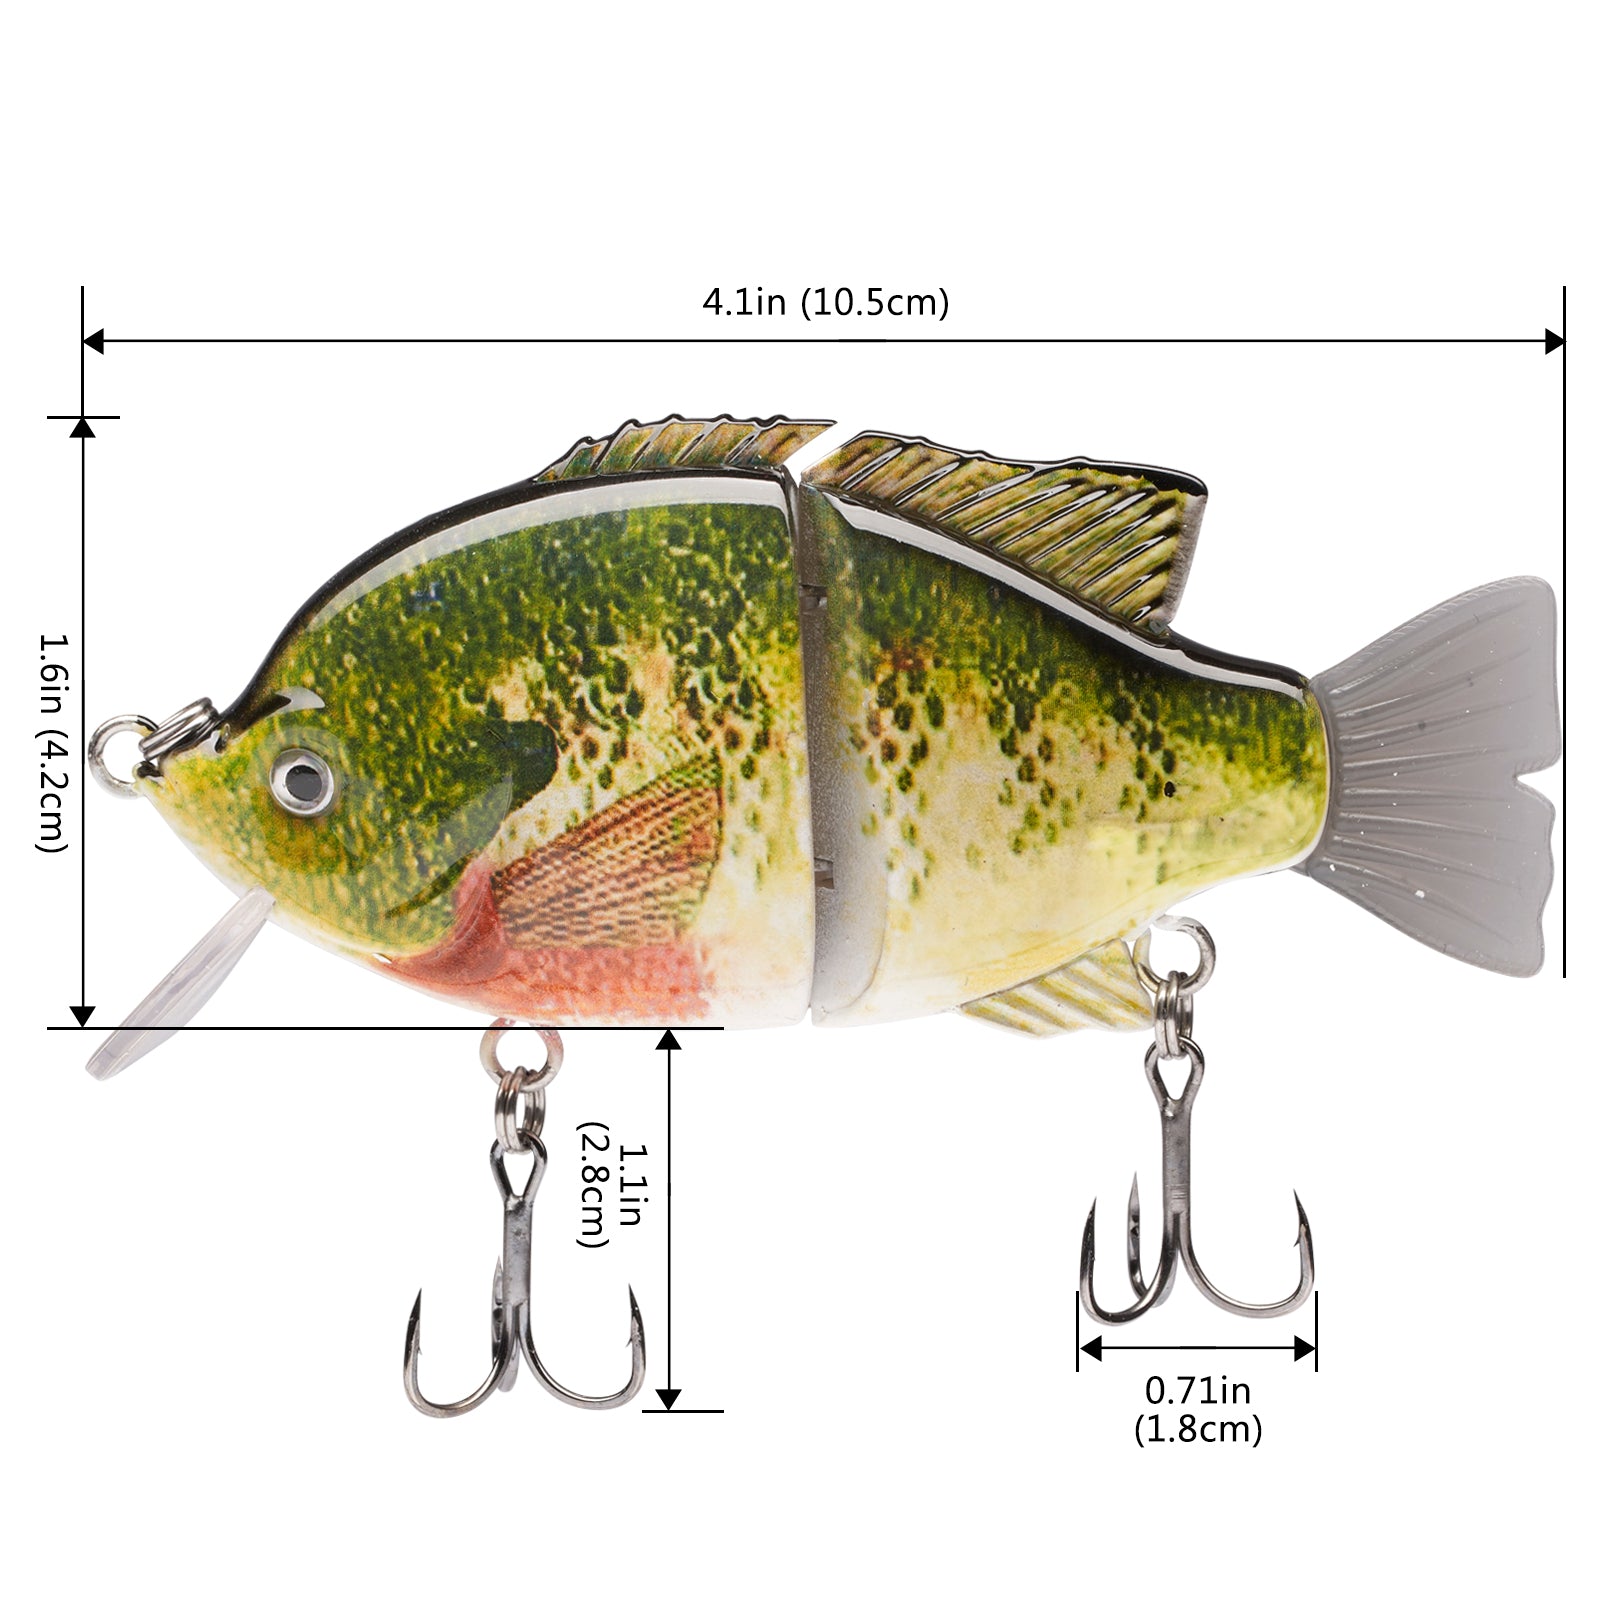 Top water baits for bass Hard Swimbait 4.1” 1-1/8 oz